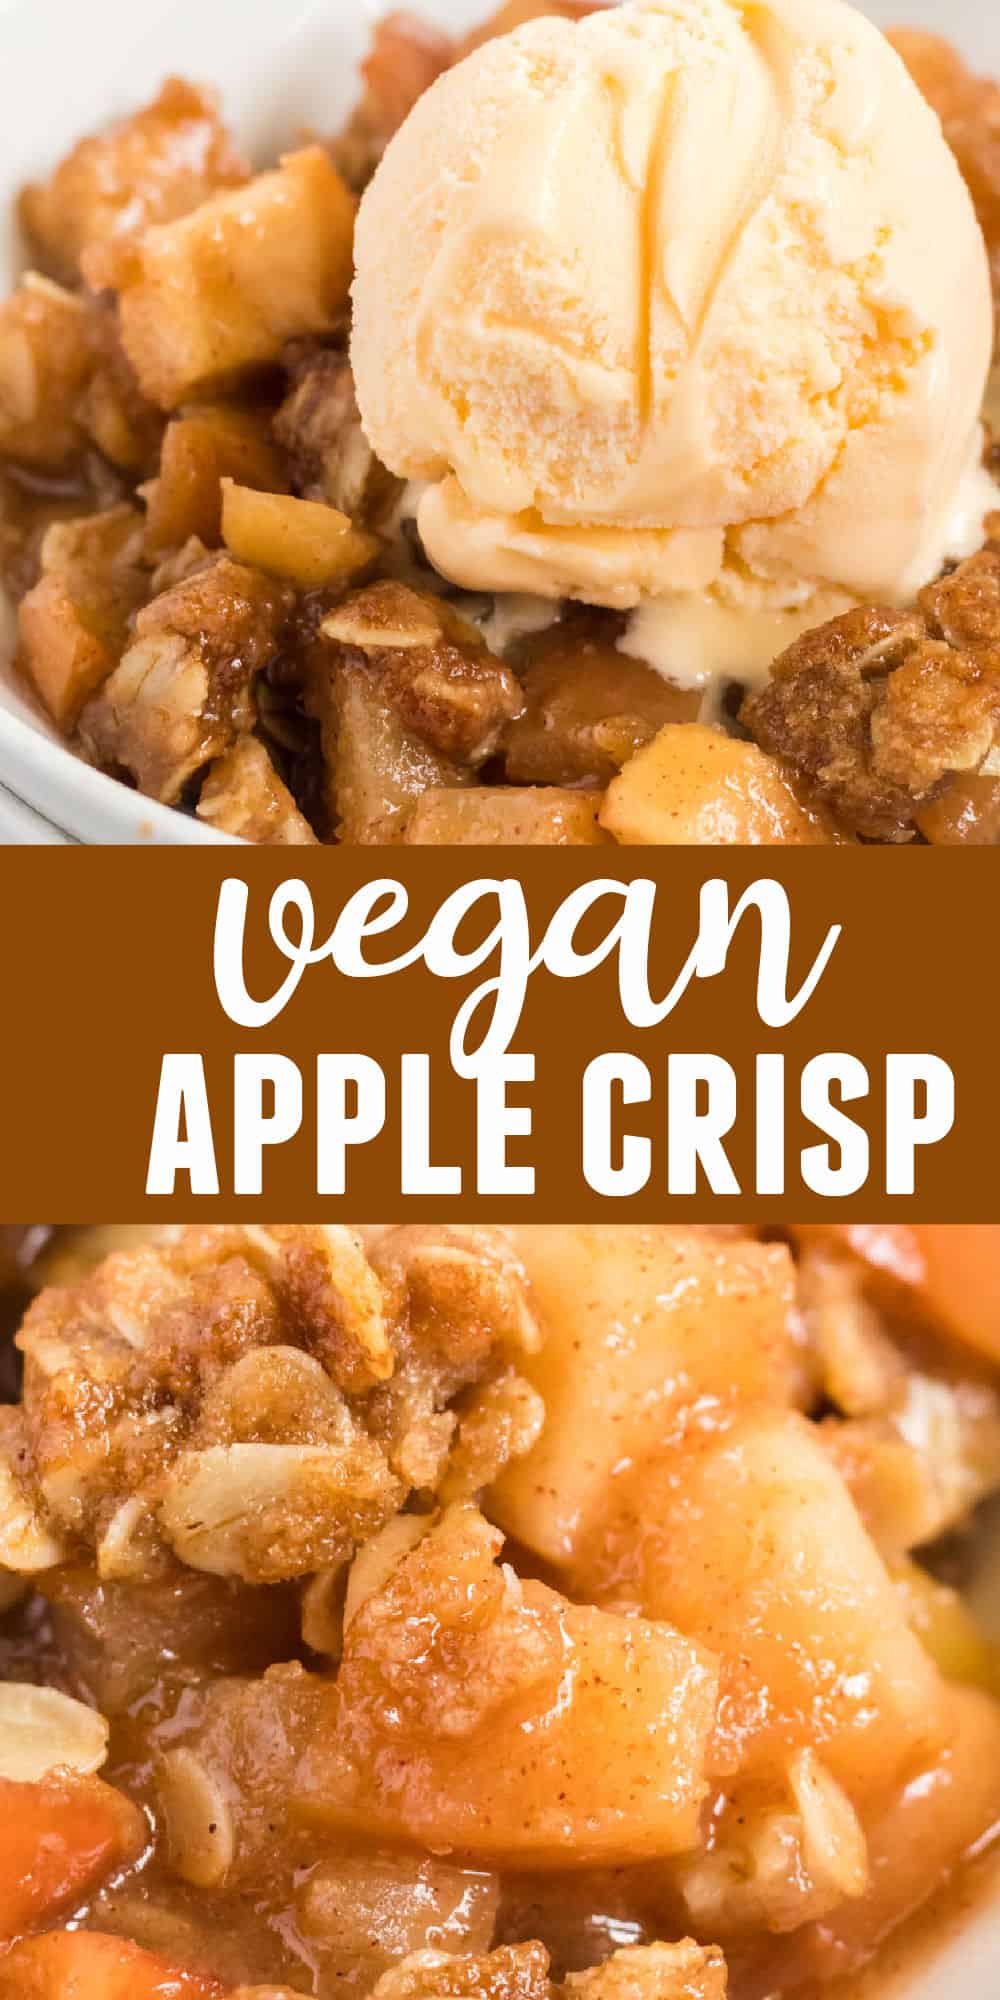 image with text "vegan apple crisp"